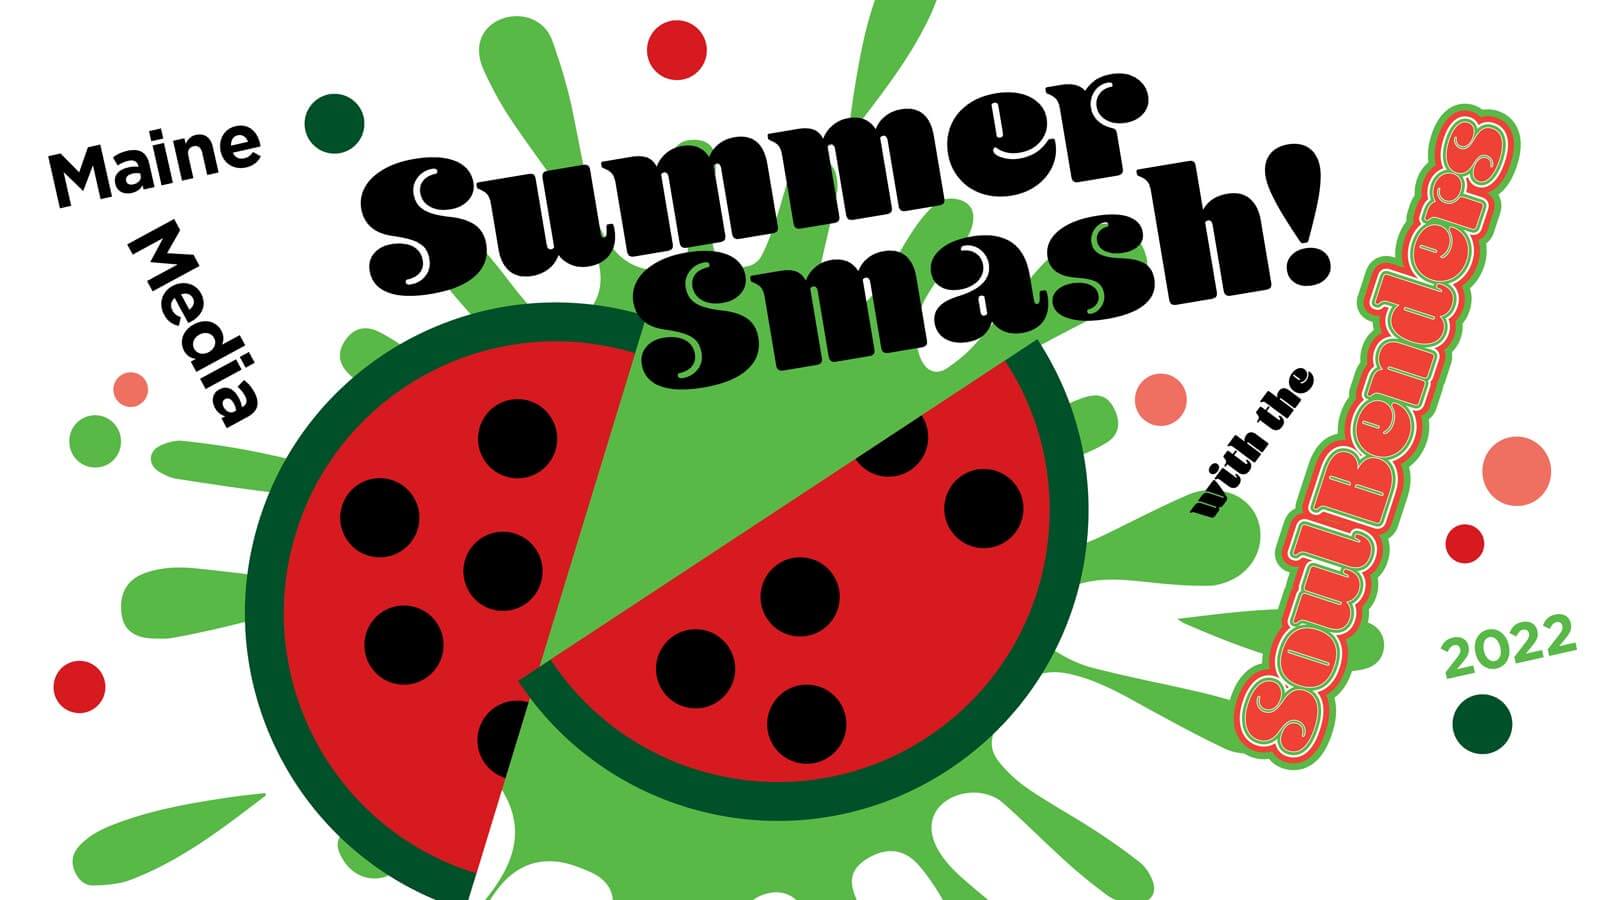 Maine Media Summer Smash! 2022 Logo